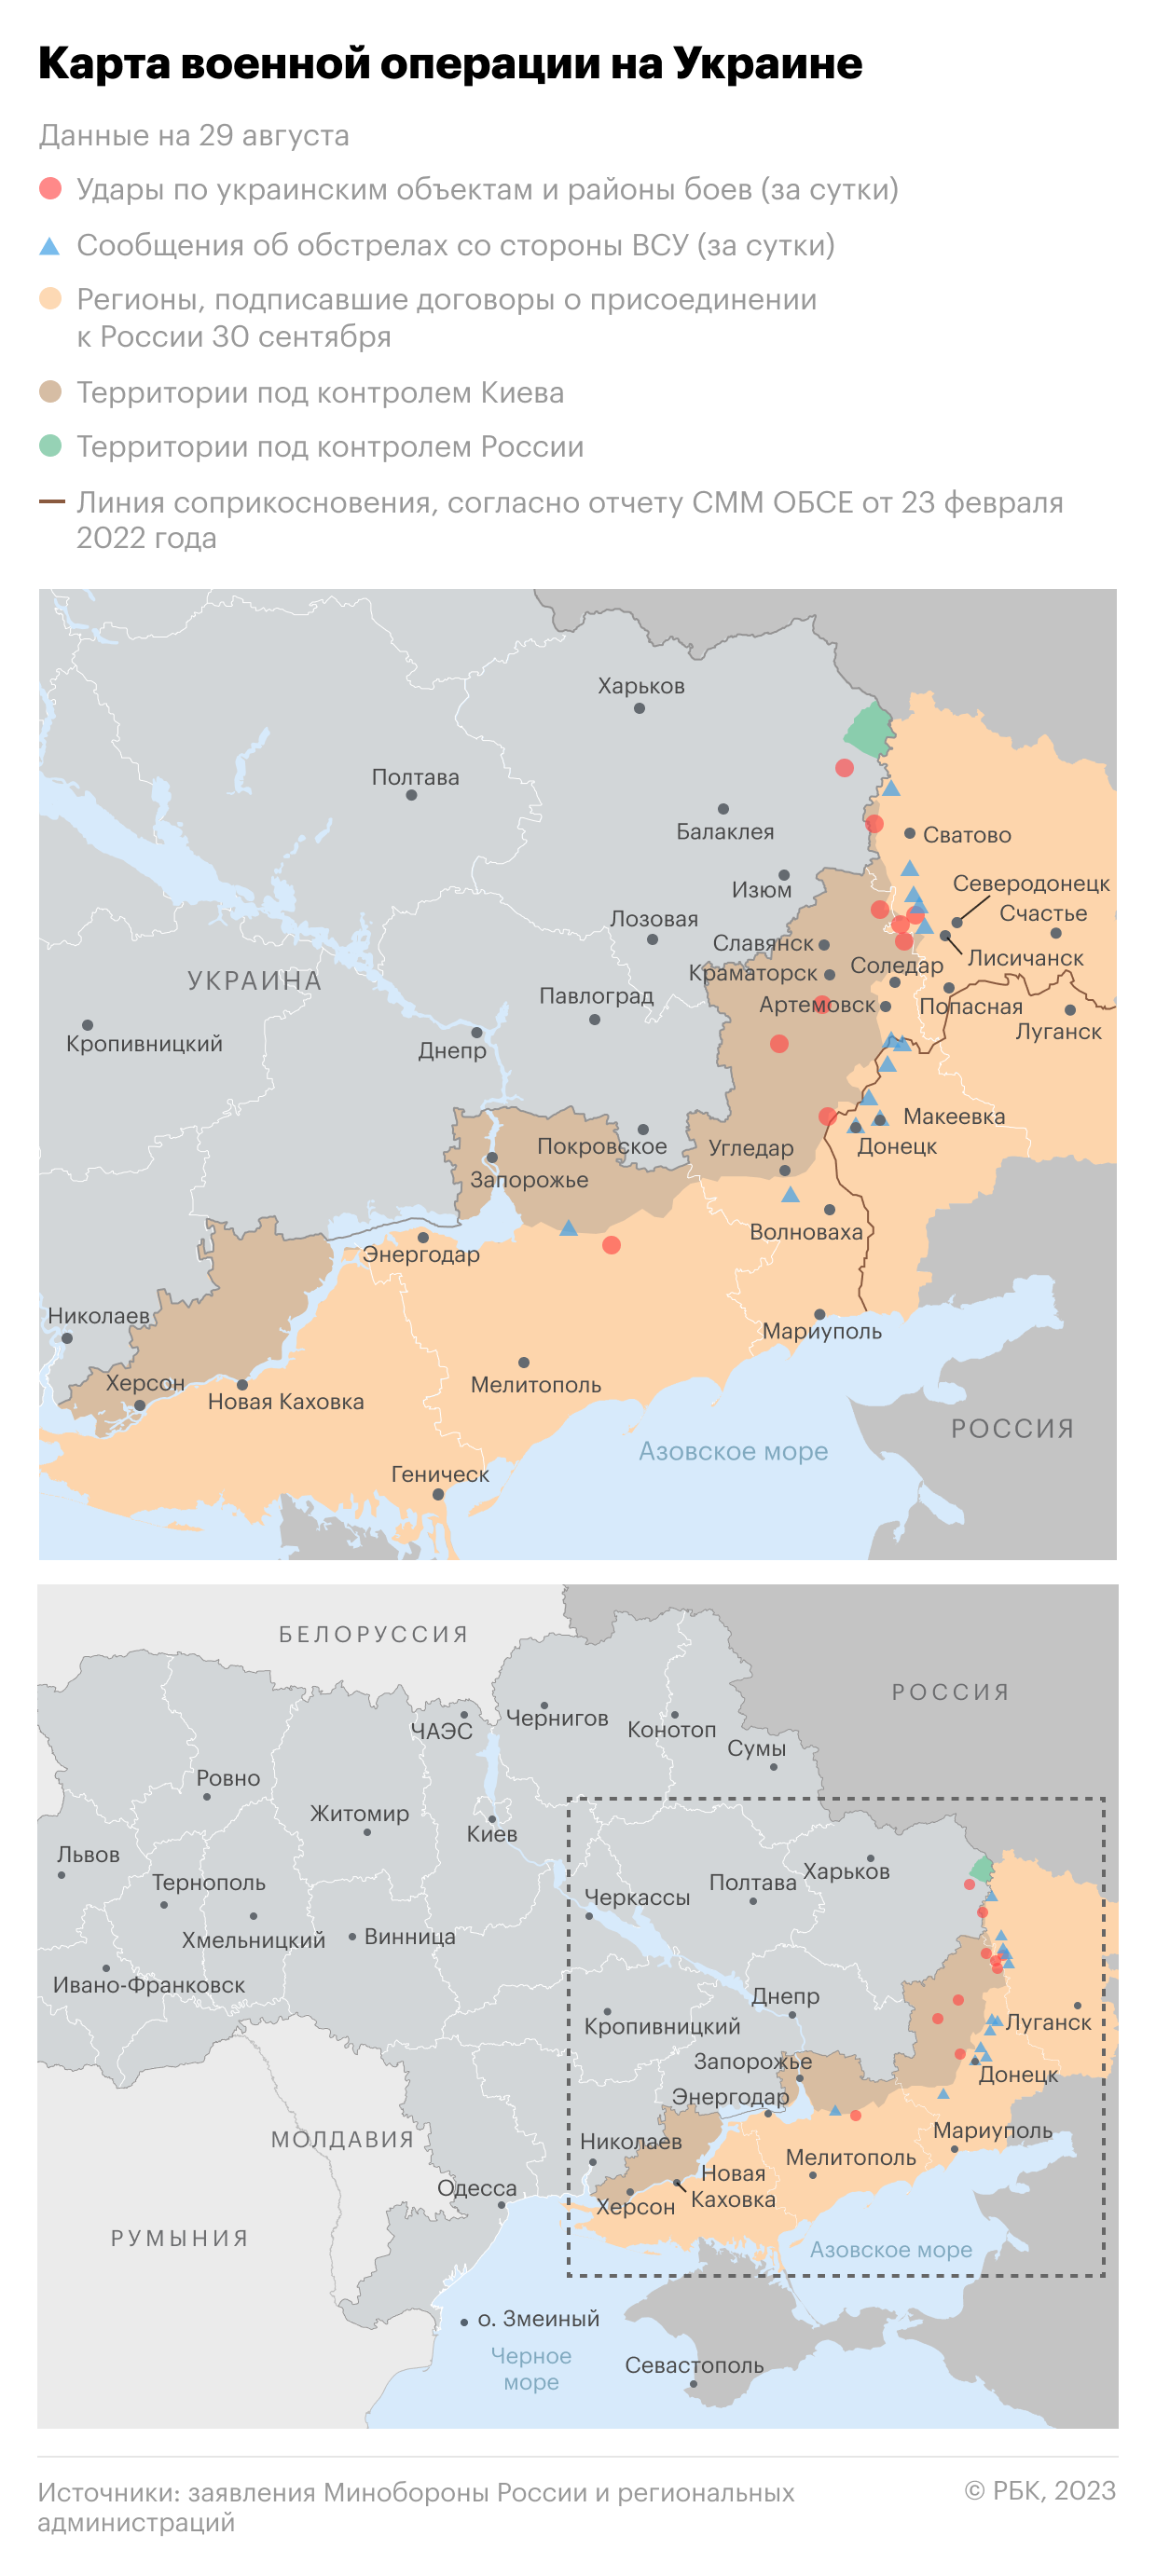 Военная операция на Украине. Карта на 29 августа